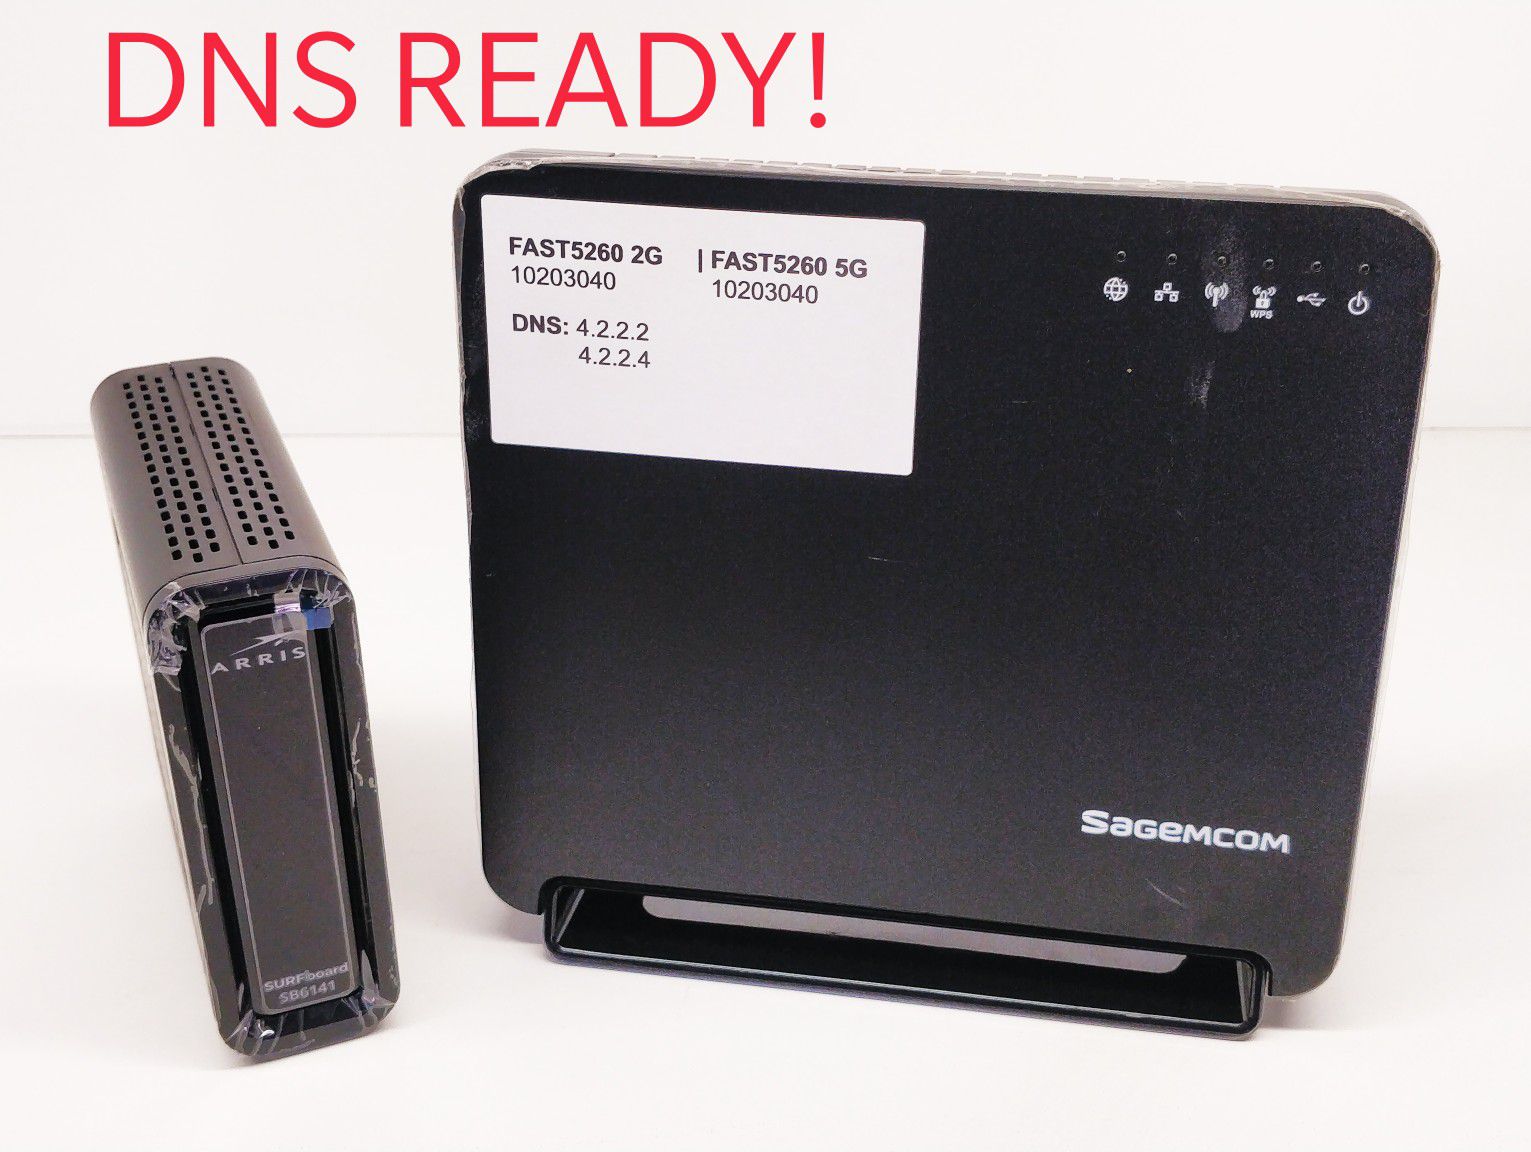 SB6141 + sagemcom fast5260 router combo DNS ready